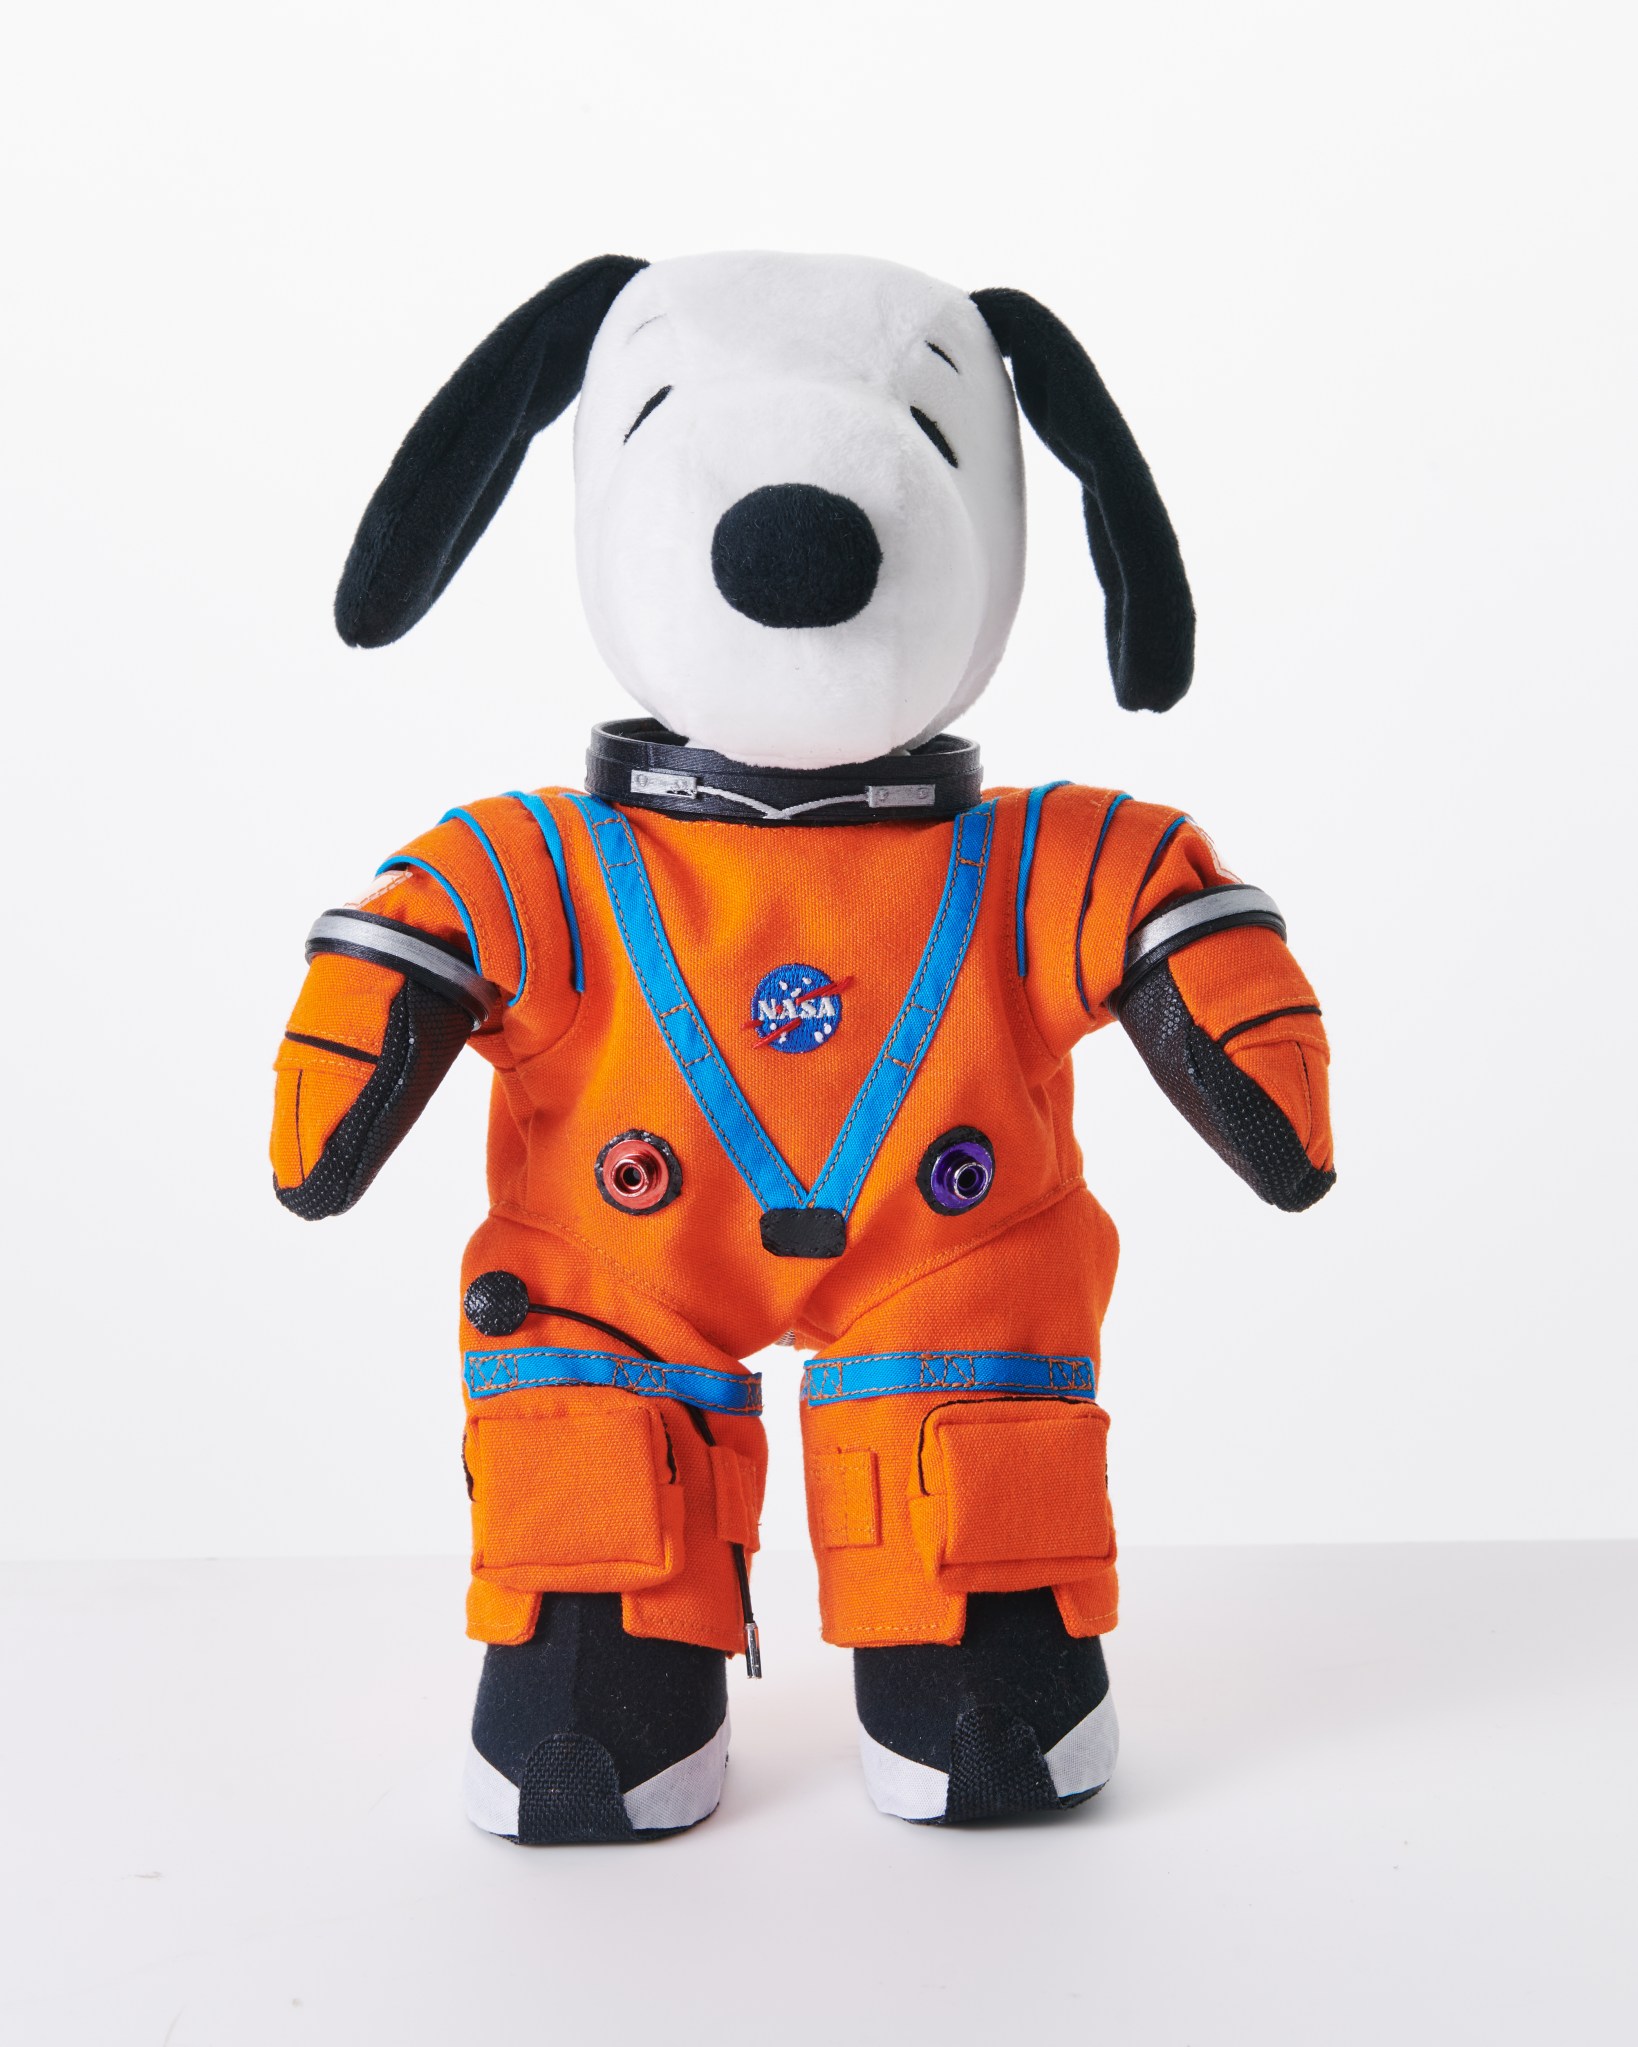 Astronaut Snoopy toys